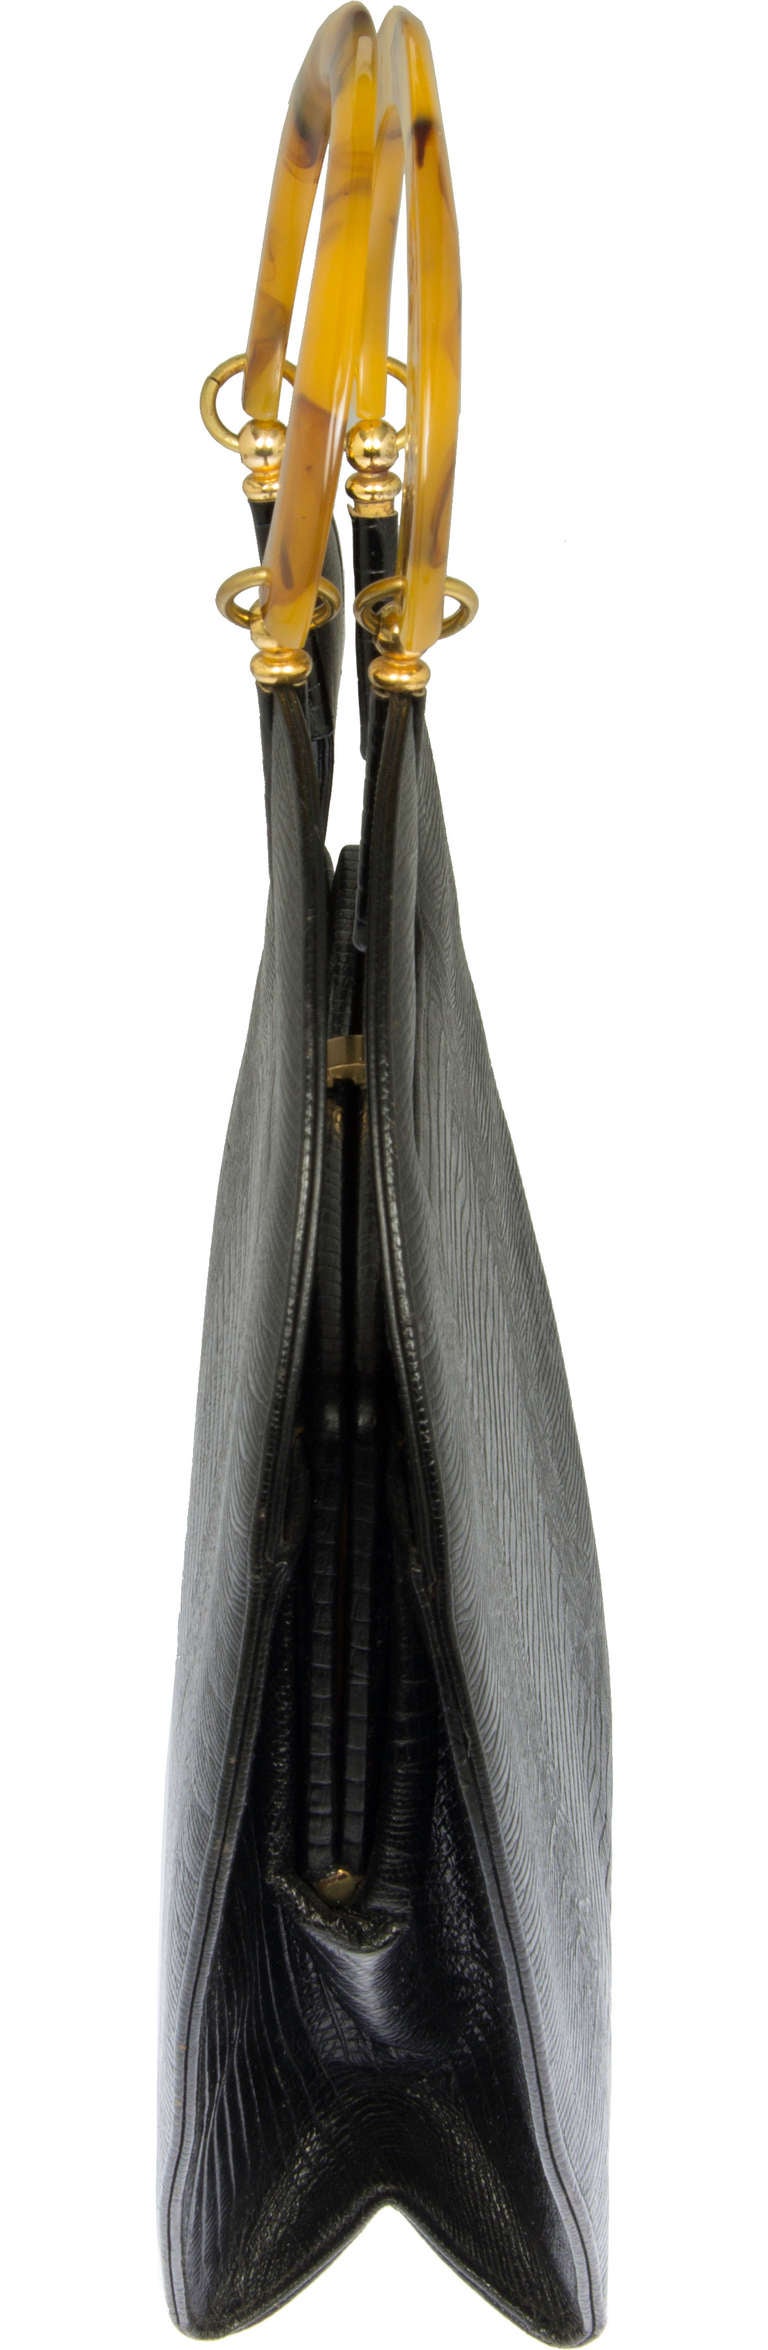 Large and Sculptural Handbag with Bakelite Handle 1